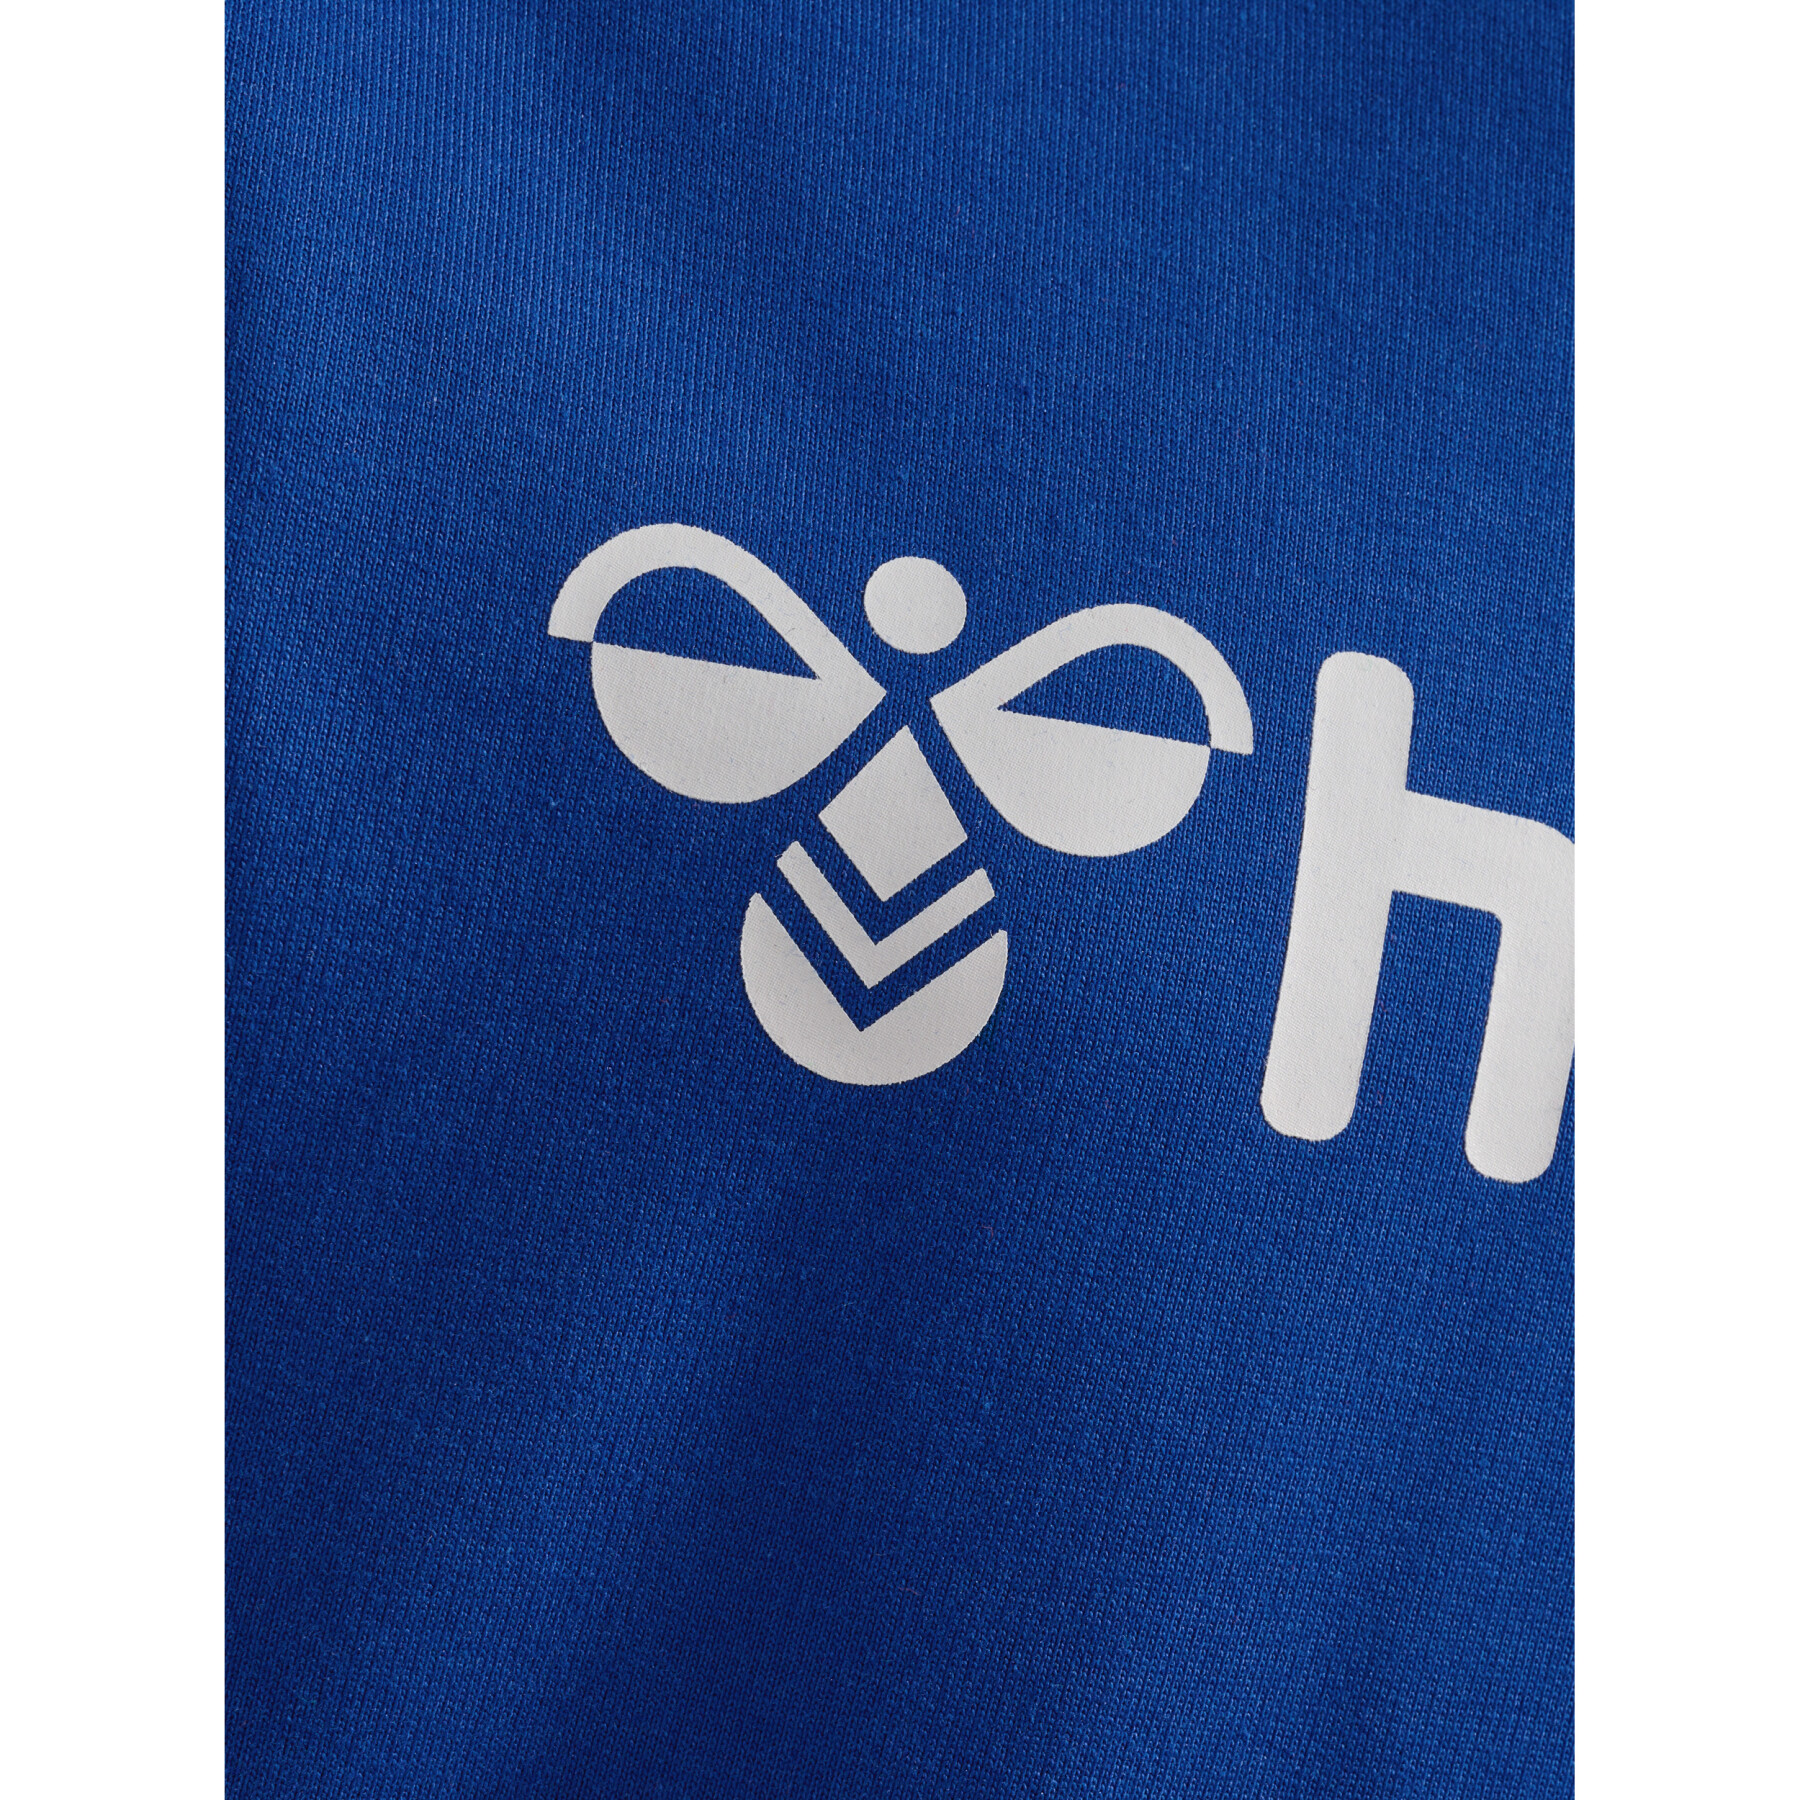 Child hoodie Hummel GO 2.0 Logo